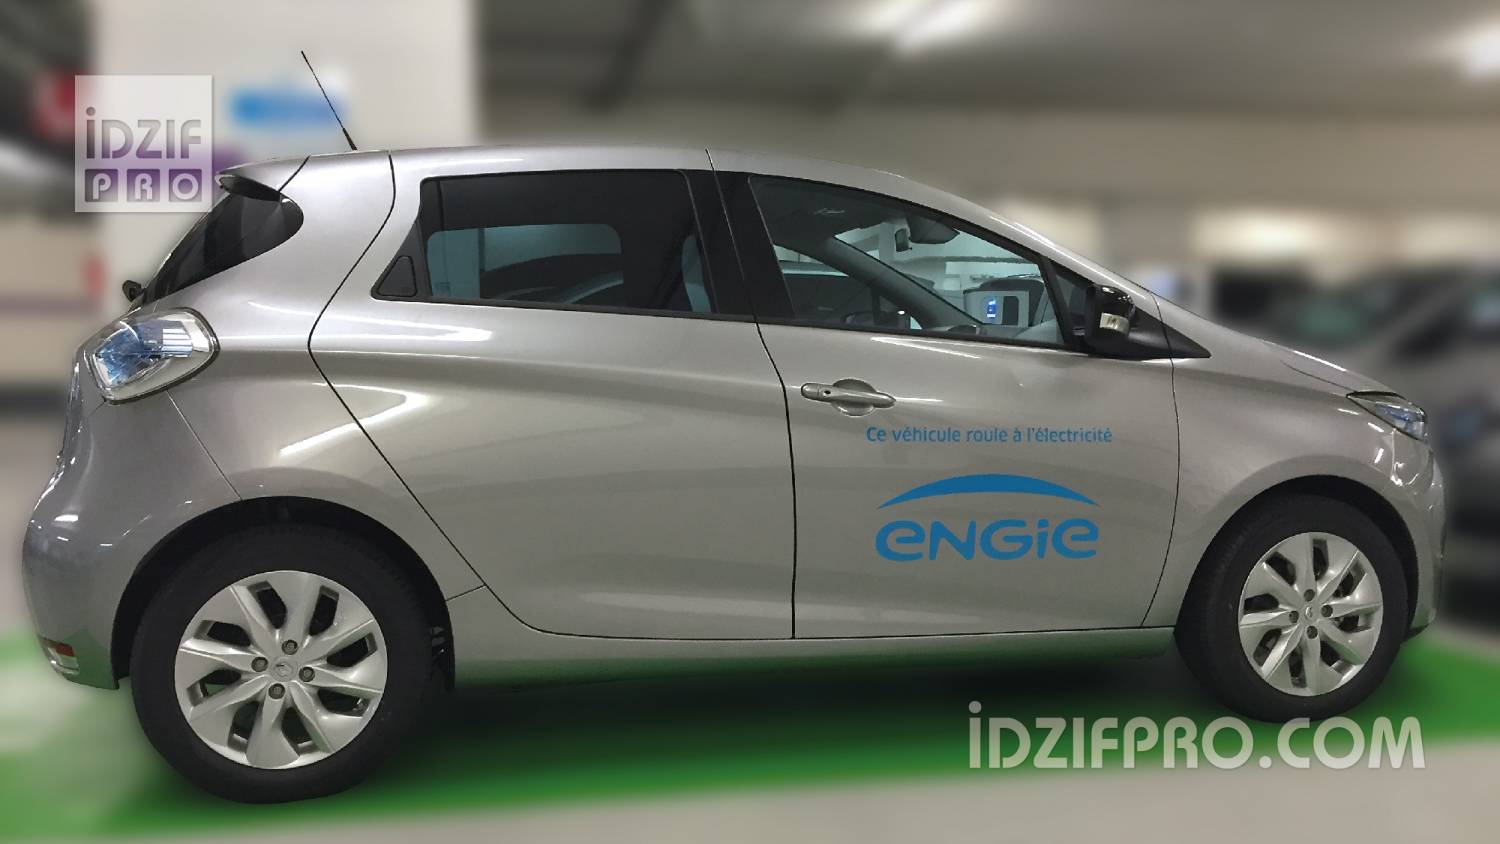  marquage voiture electrique ENGIE iDzifPro